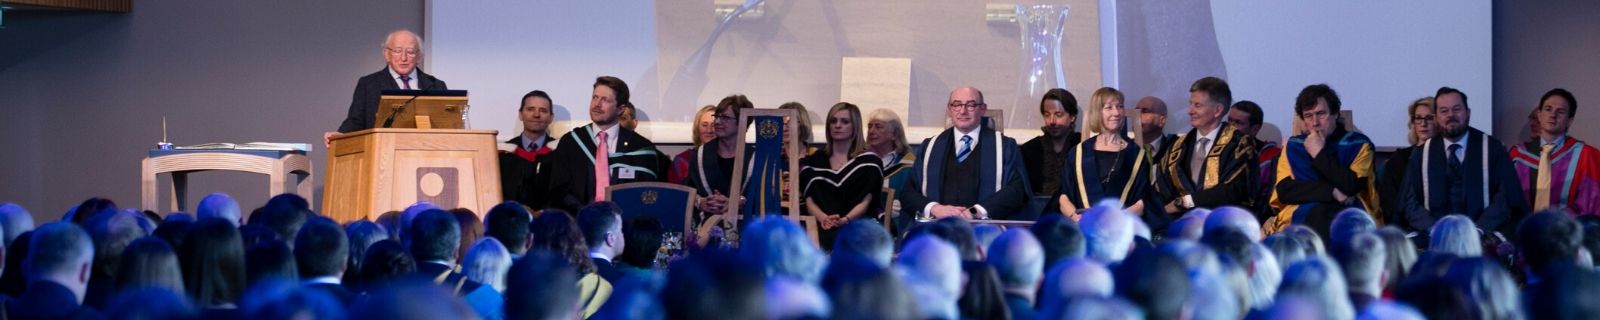 President Higgins at Dublin Degree Ceremony 2019, Croke Park